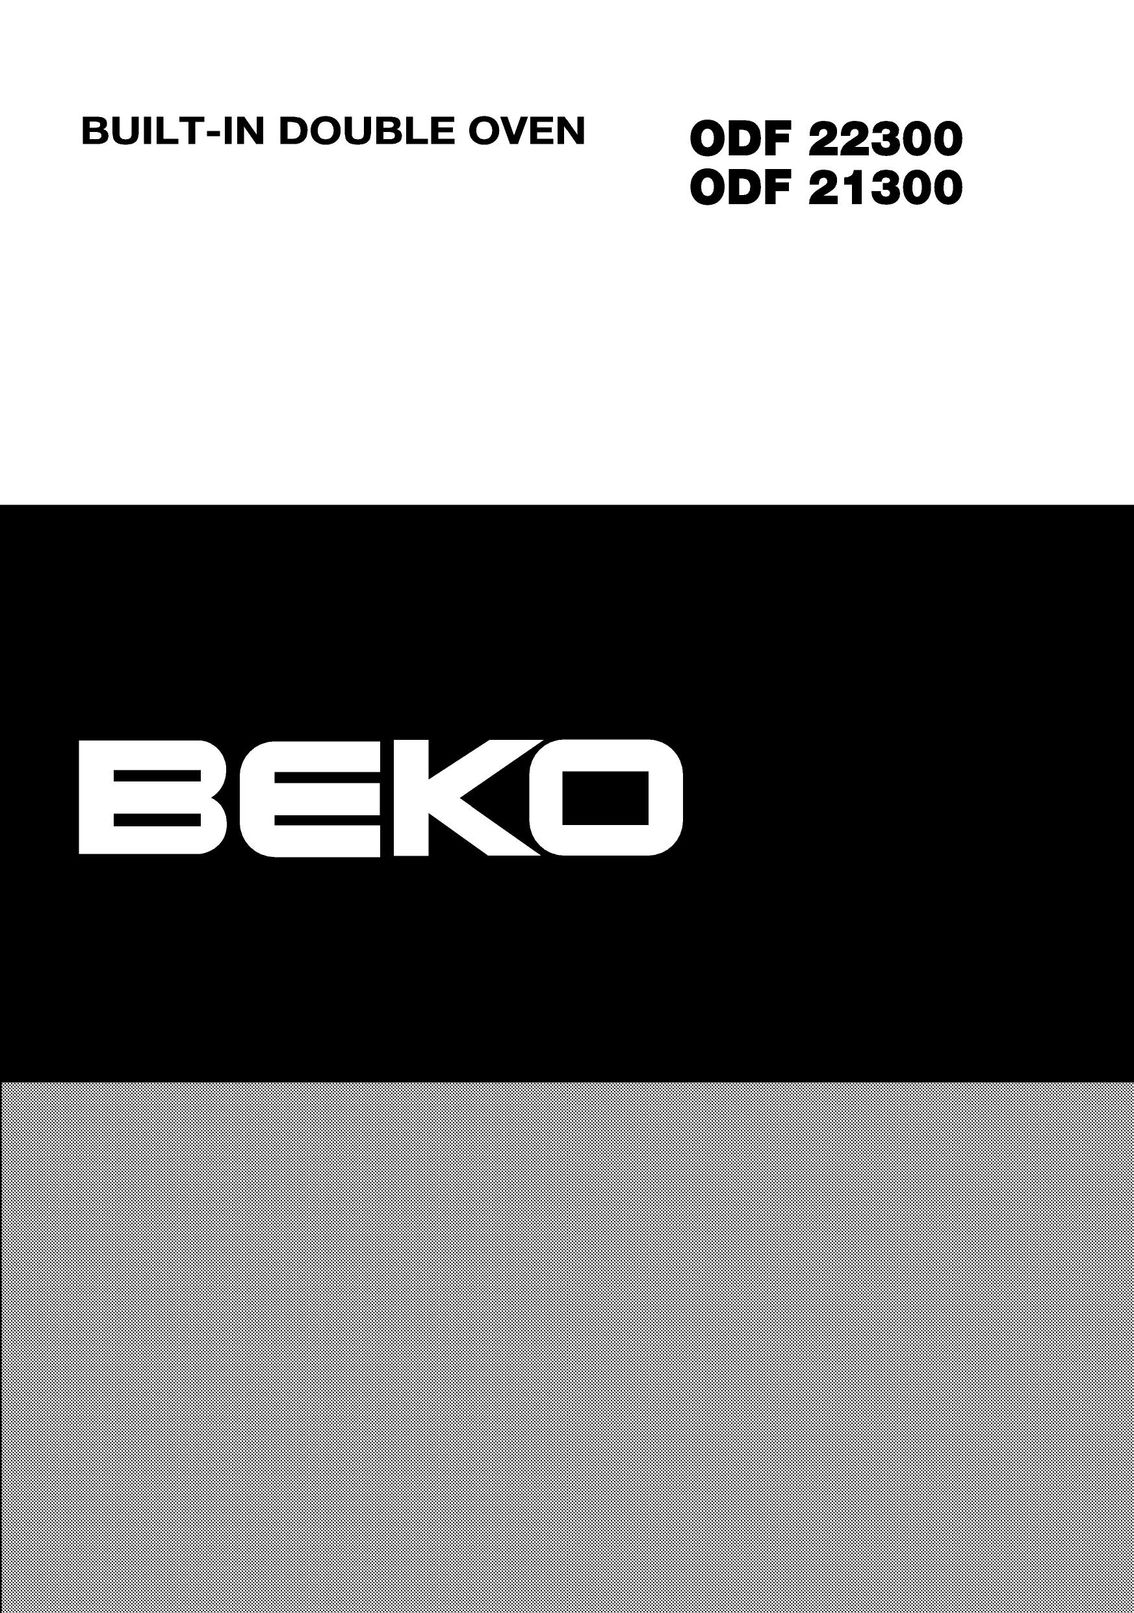 Beko ODF 22300 Double Oven User Manual